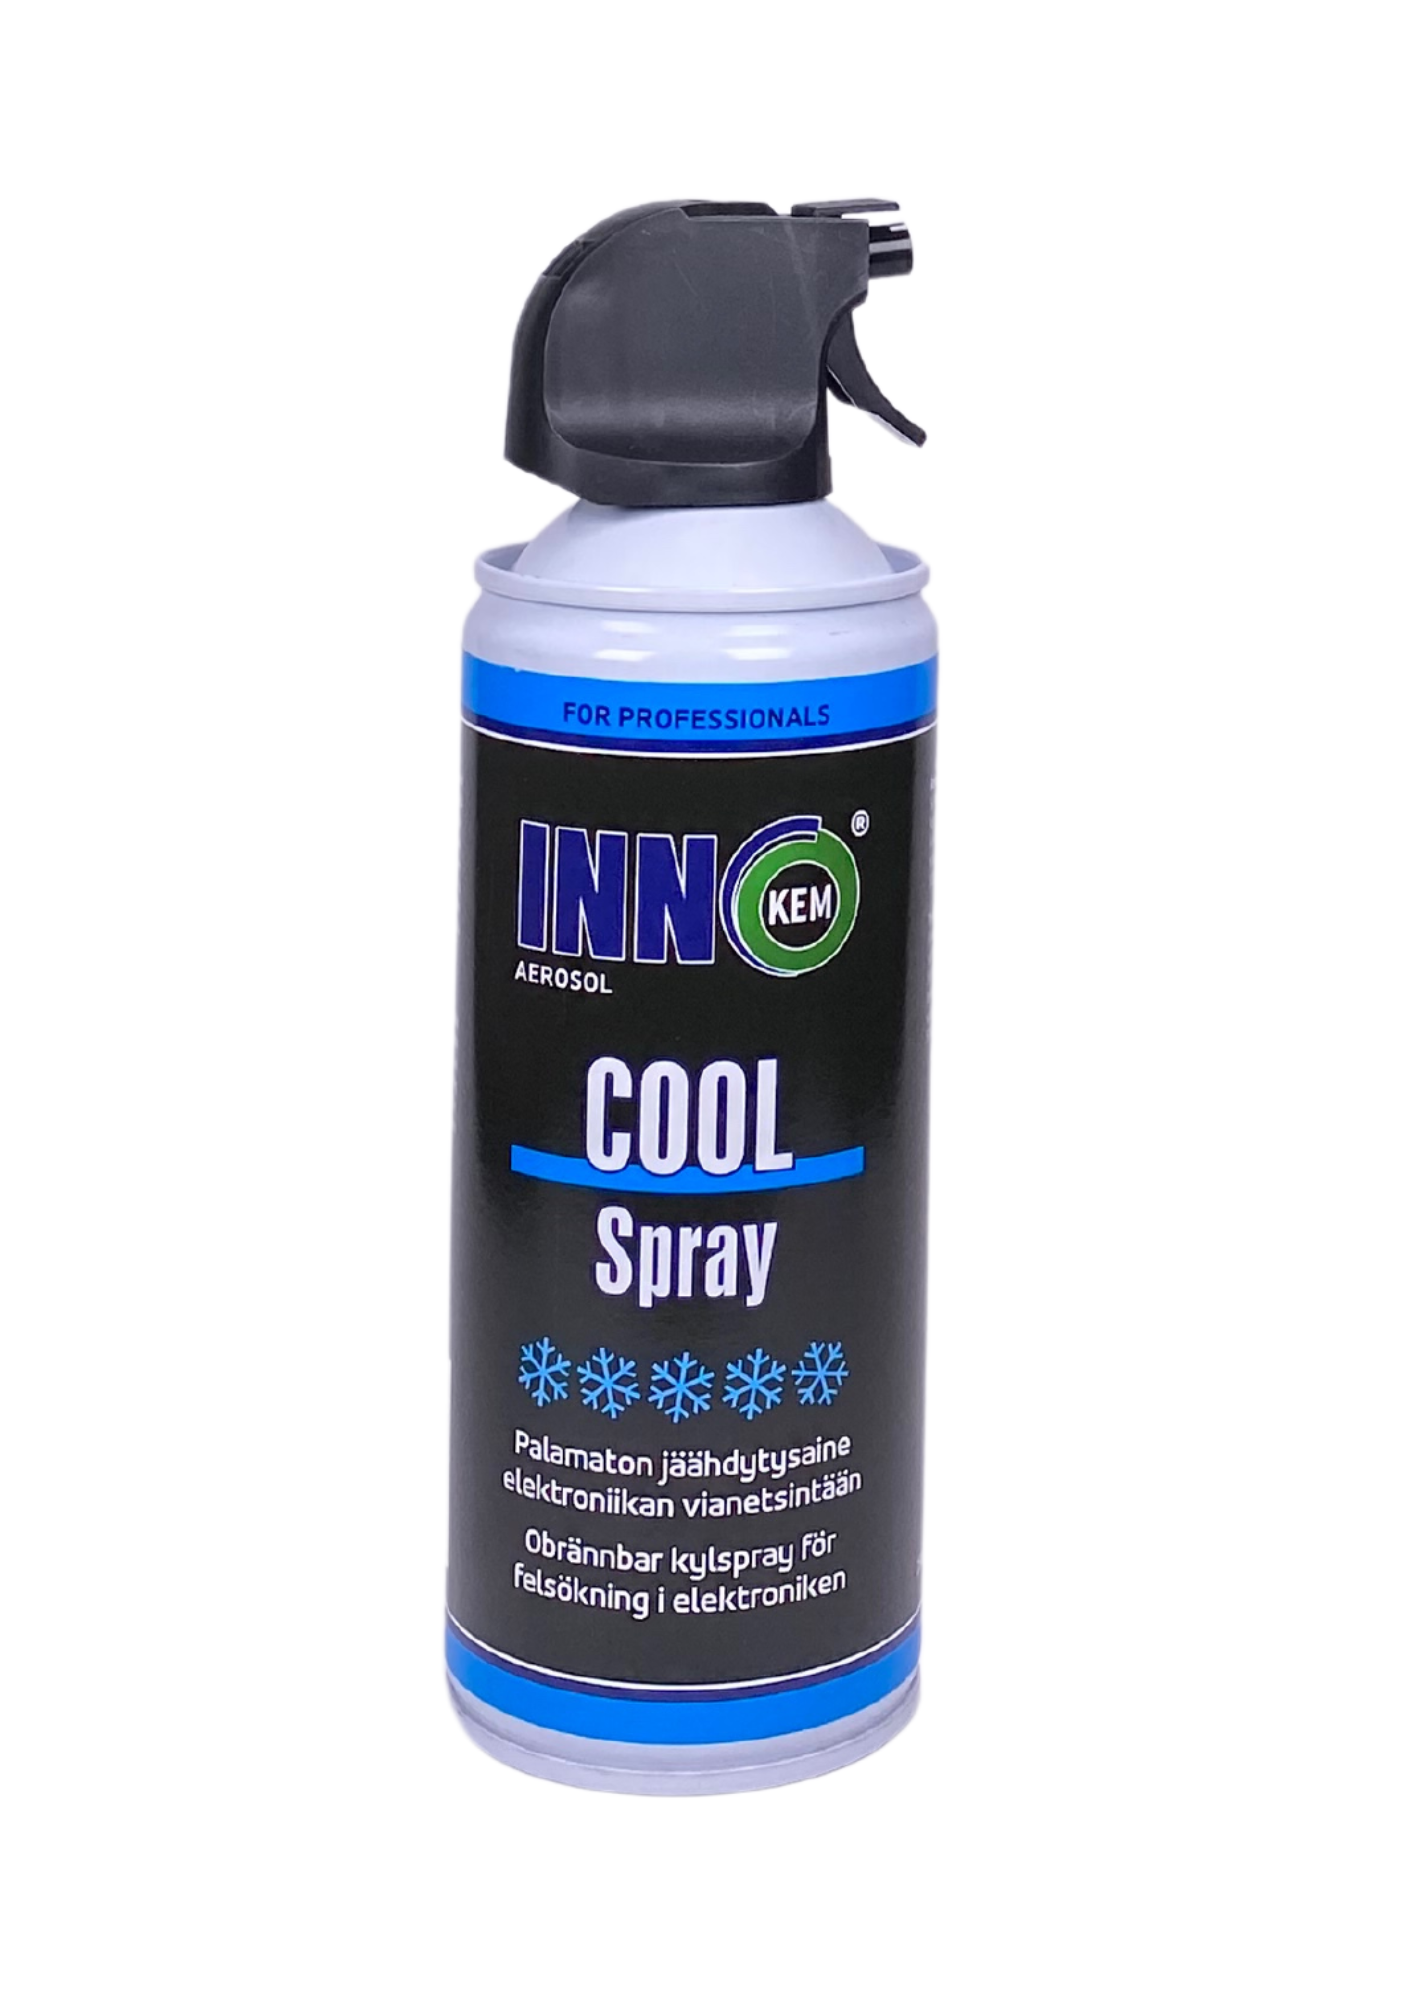 INNOKEM Cool Spray Kylmäspray 400ml